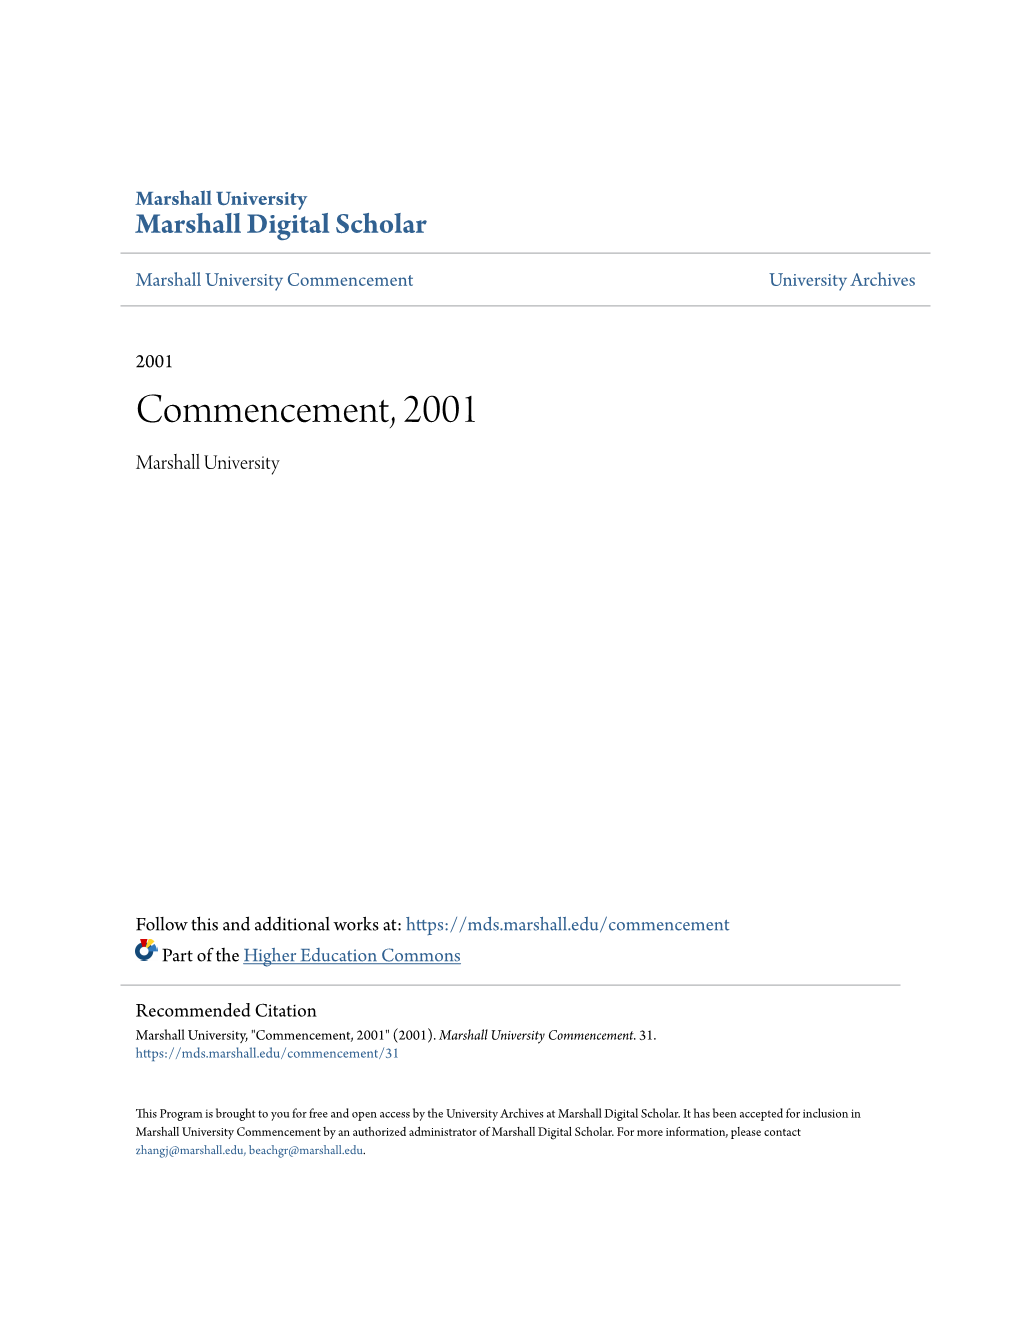 Commencement, 2001 Marshall University